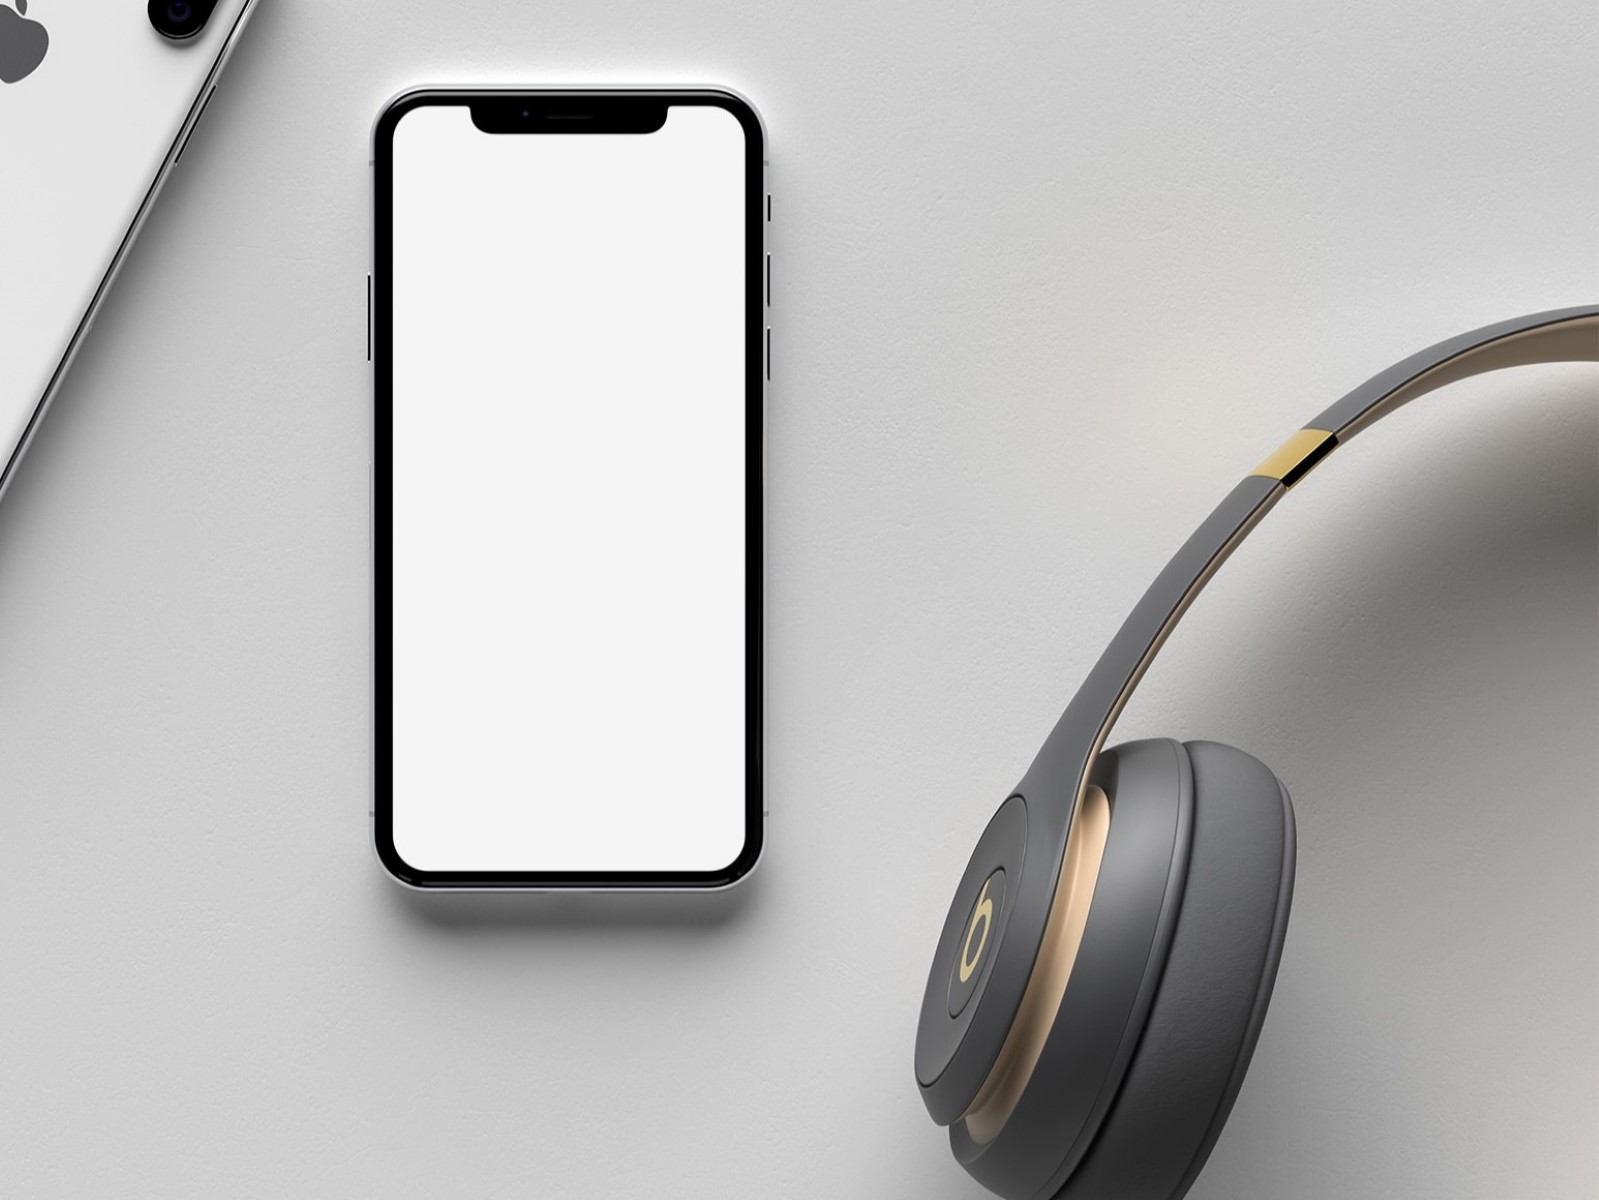 Headphone Usage: Connecting Headphones To IPhone 10